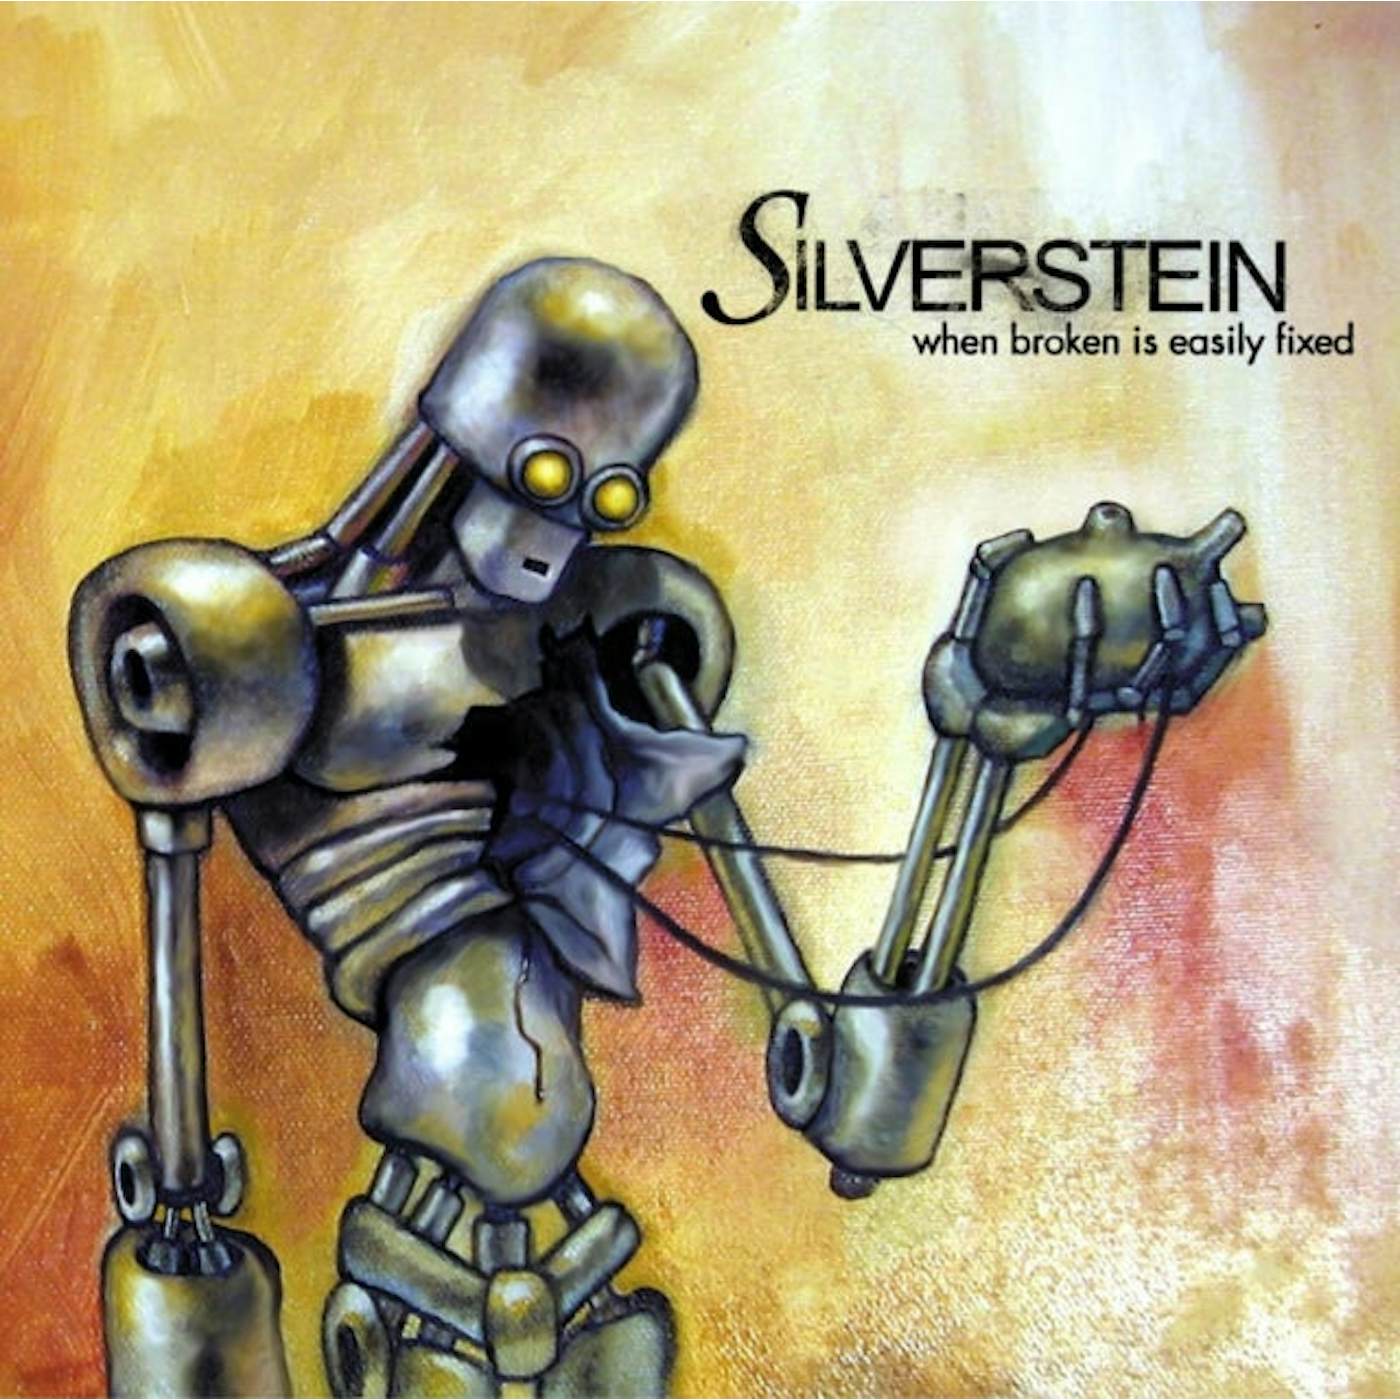 Silverstein LP Vinyl Record - When Broken Is Easily Fixed